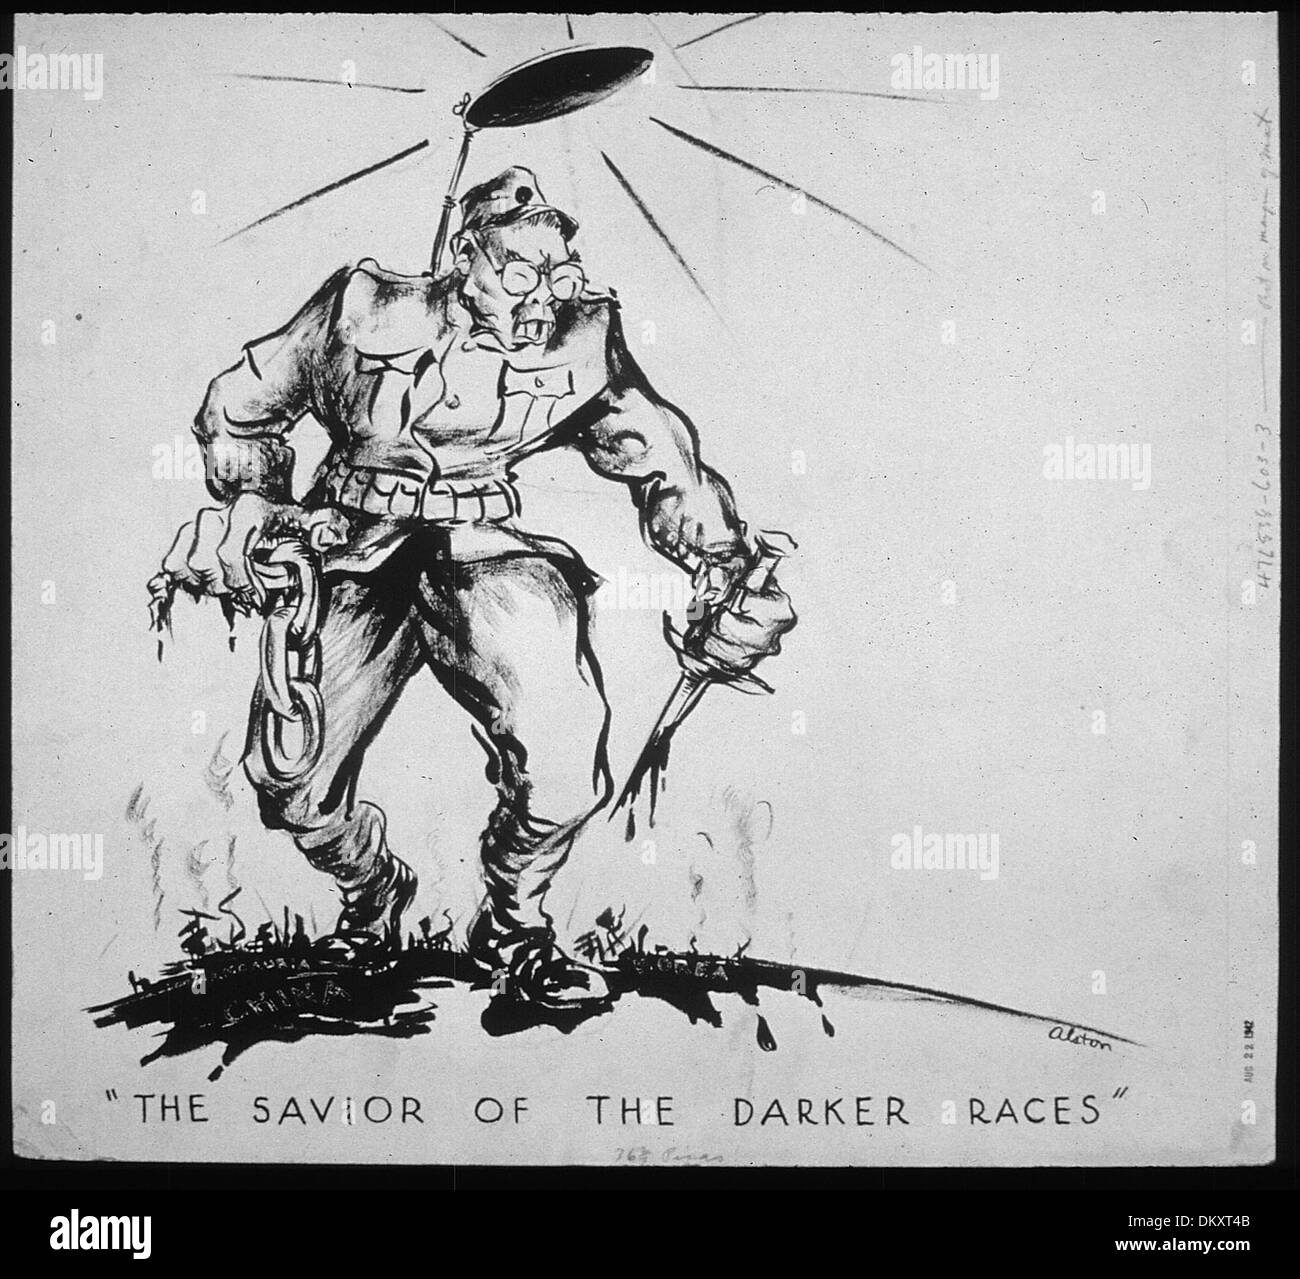 'THE SAVIOR OF THE DARKER RACES' 535657 Stock Photo